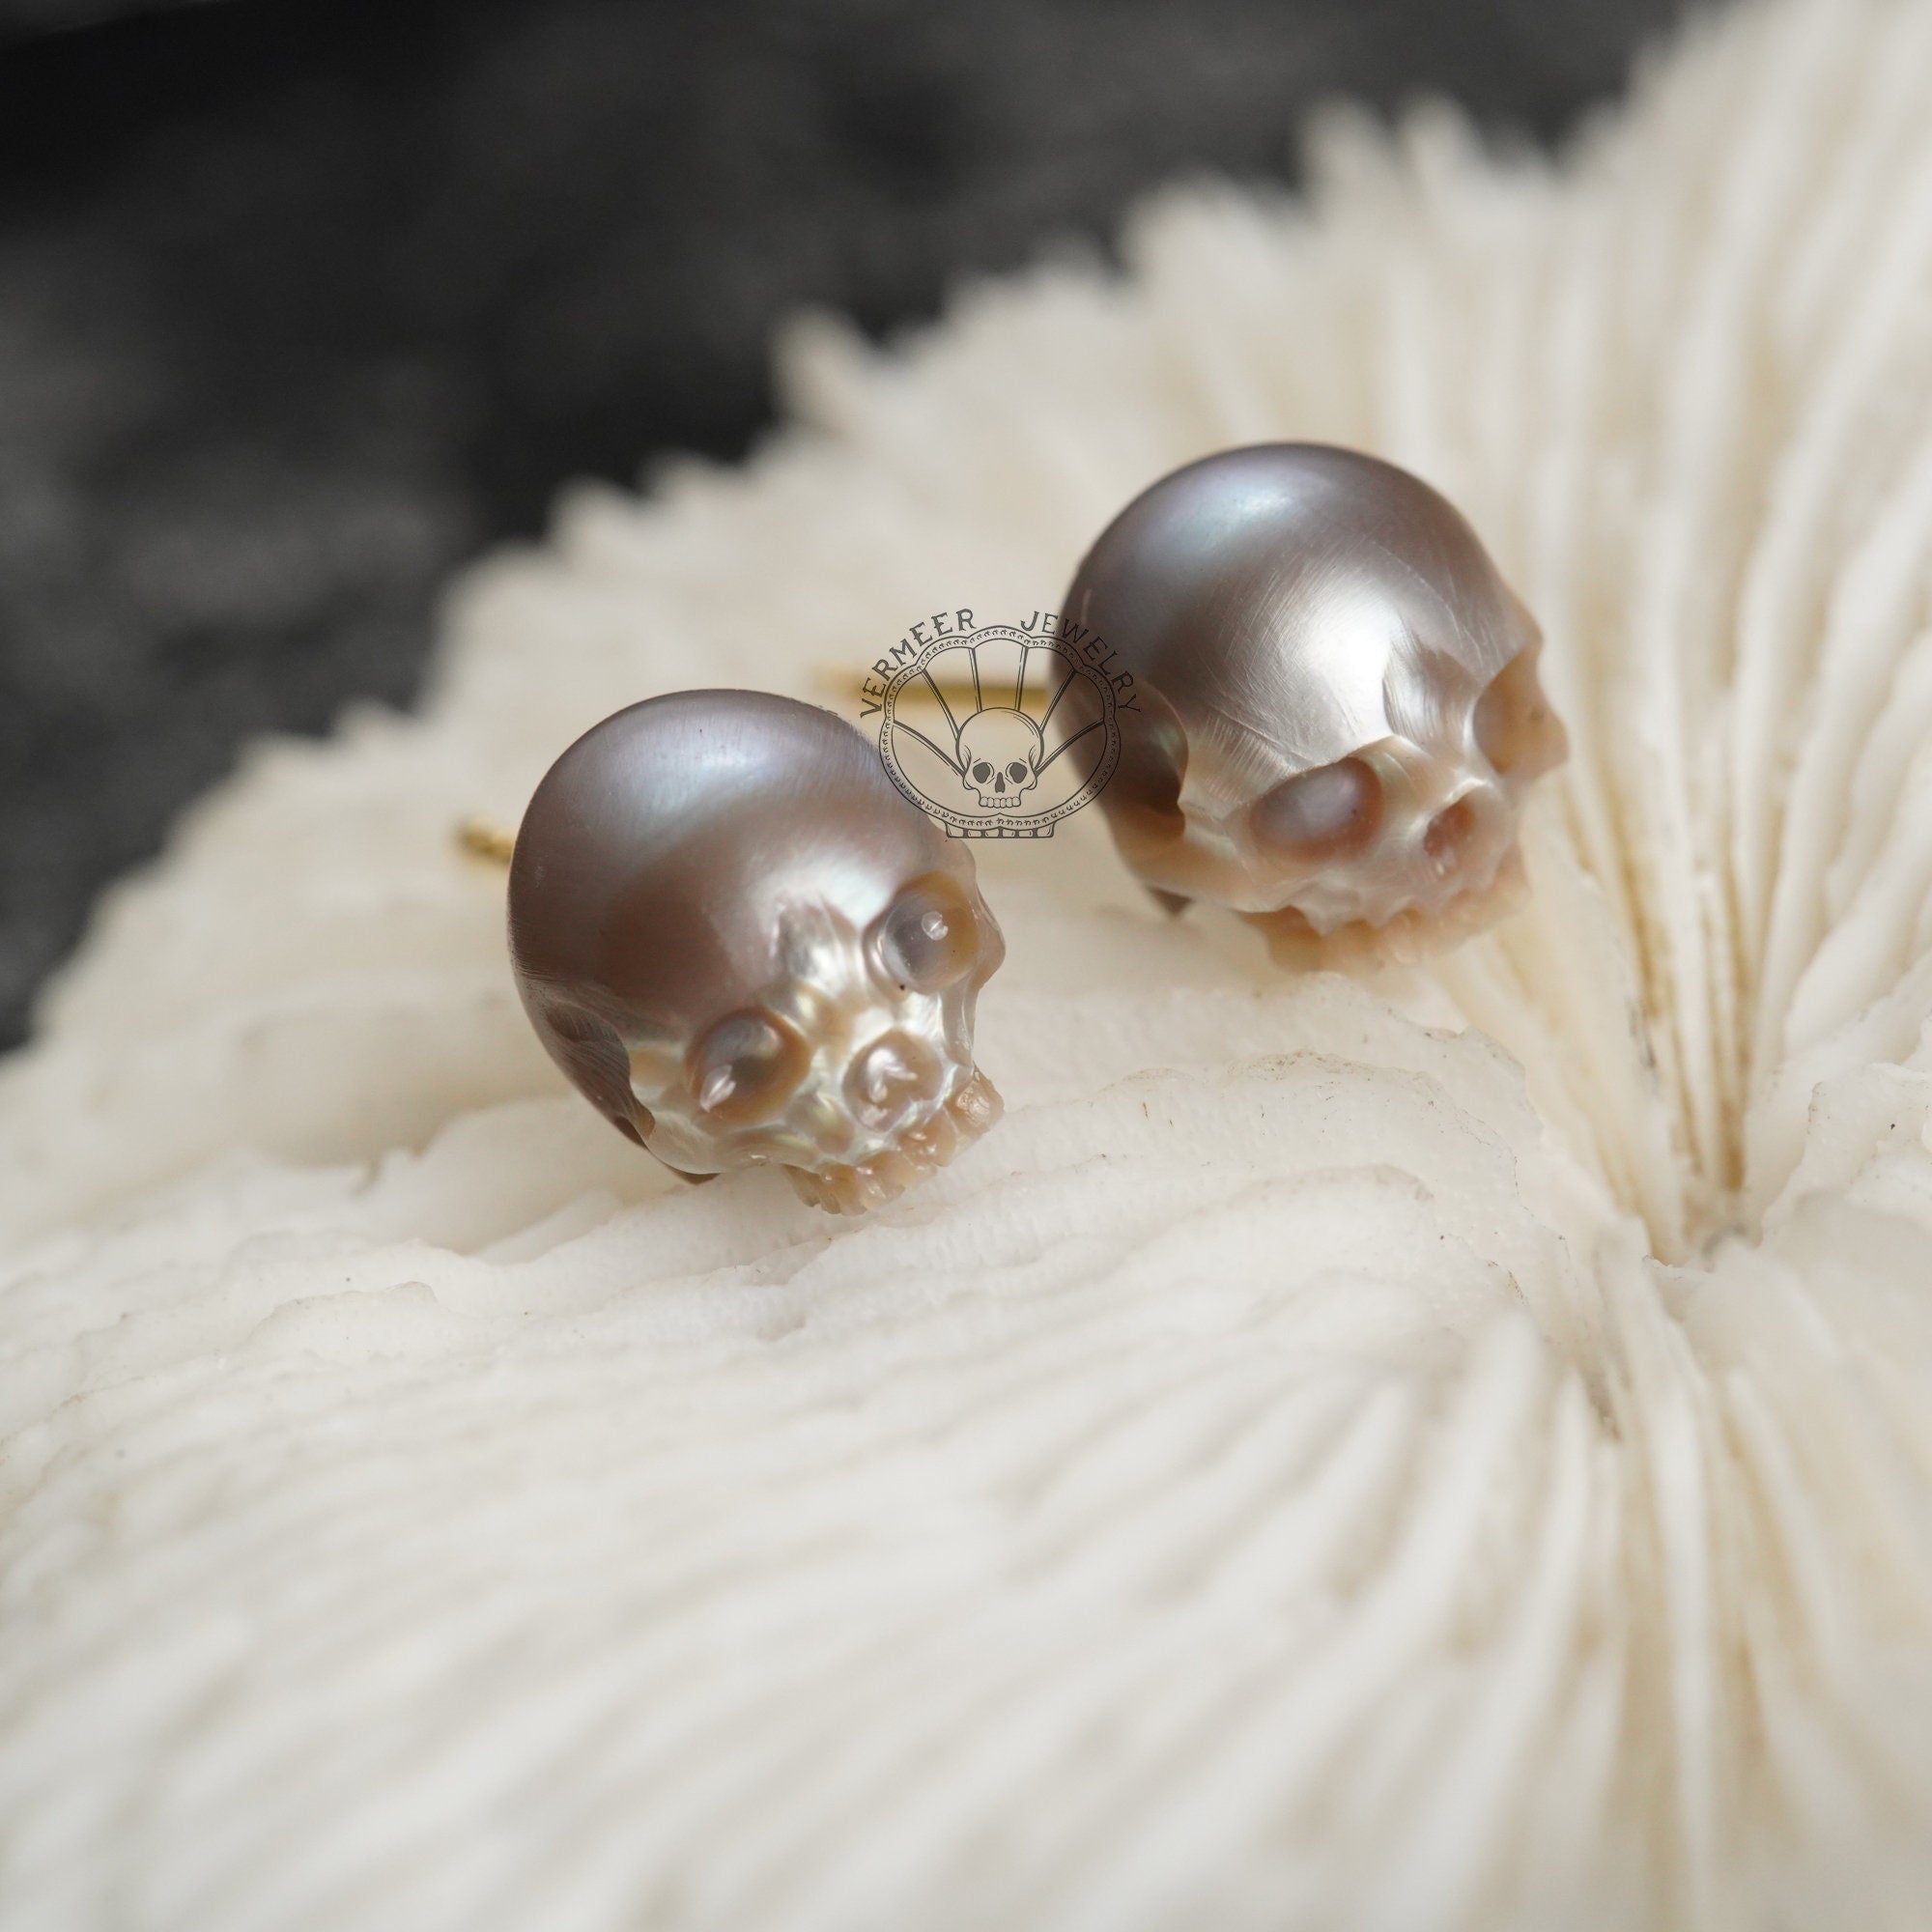 skull pearl earring stud Minimalist style handmade jewelry for lover